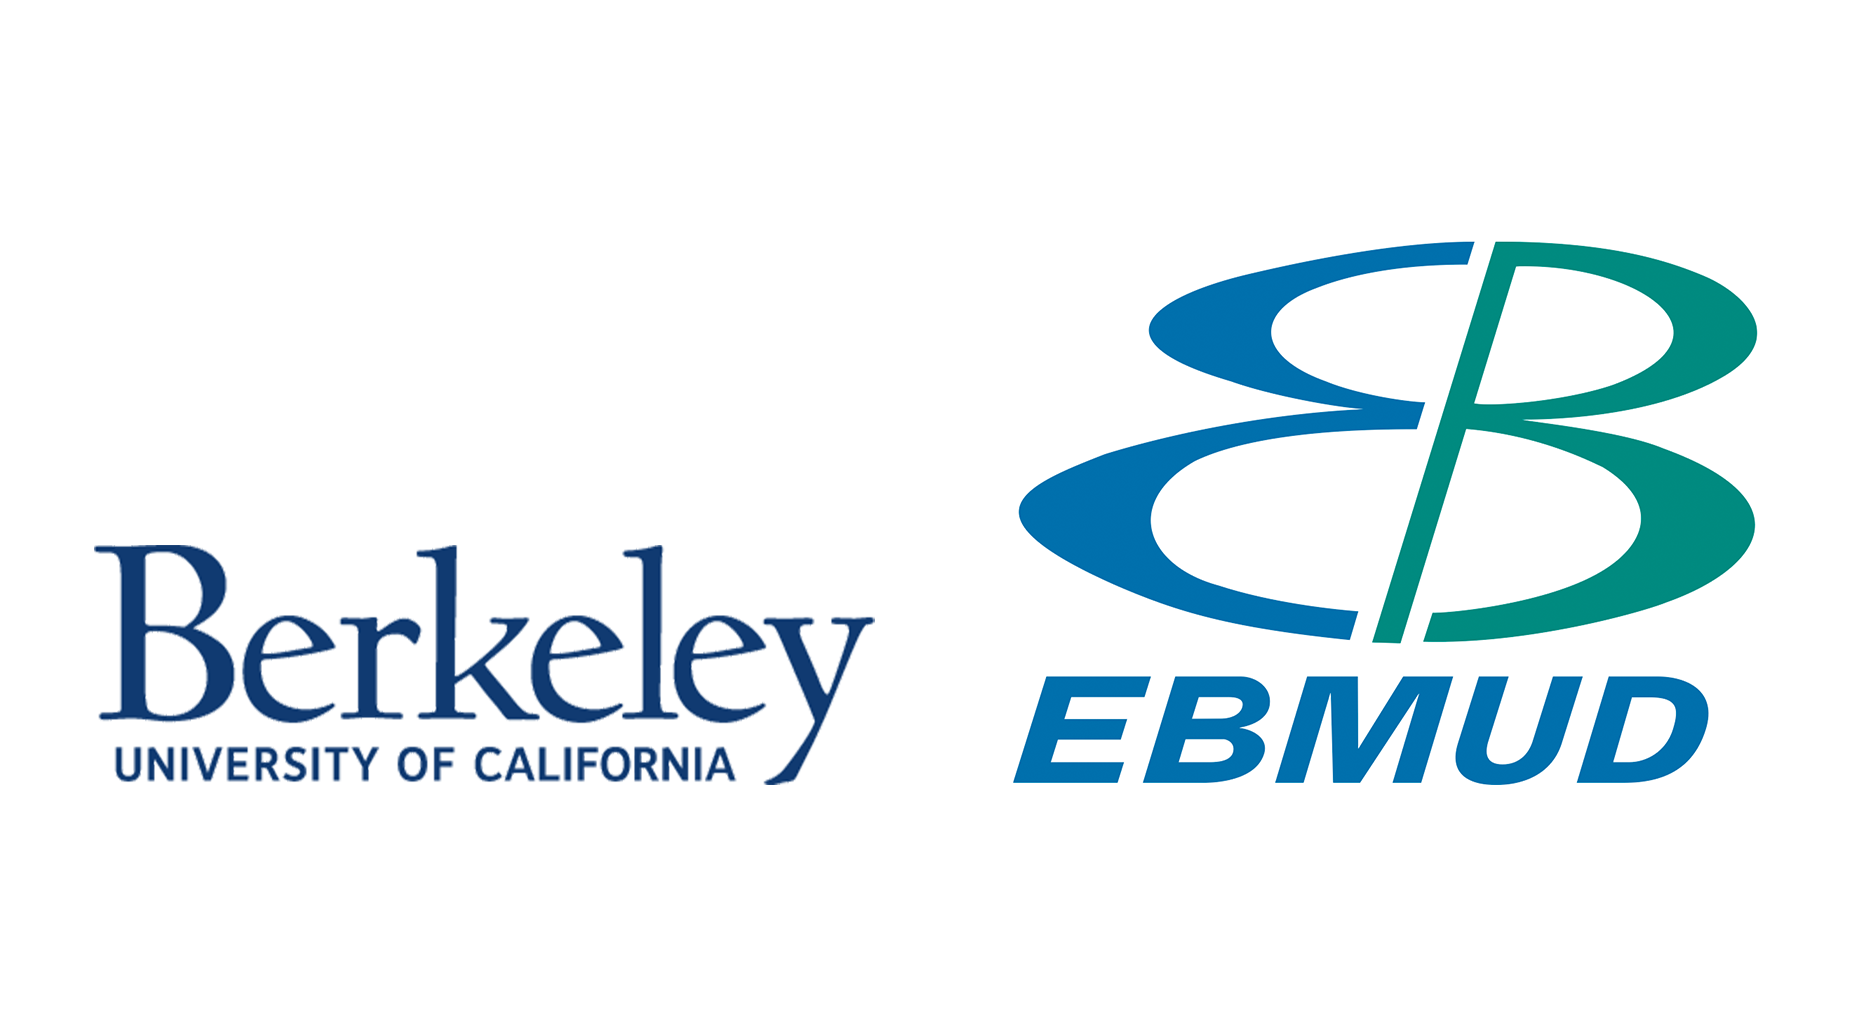 Berkeley University of California and EBMUD